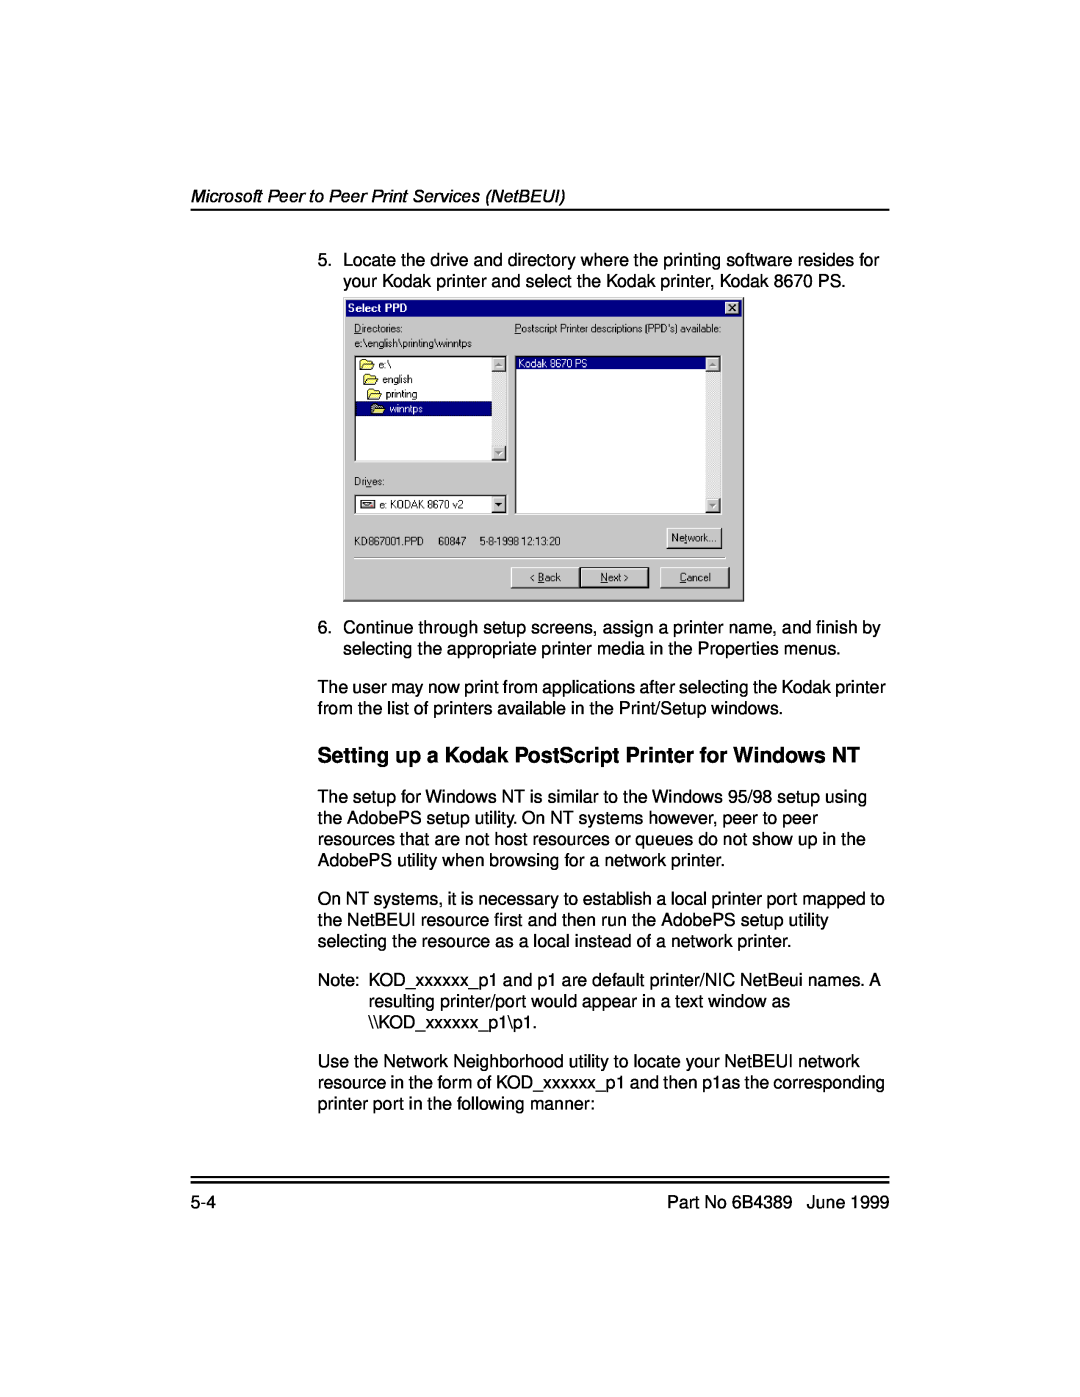 Kodak 8670, 8660 manual Setting up a Kodak PostScript Printer for Windows NT, Microsoft Peer to Peer Print Services NetBEUI 